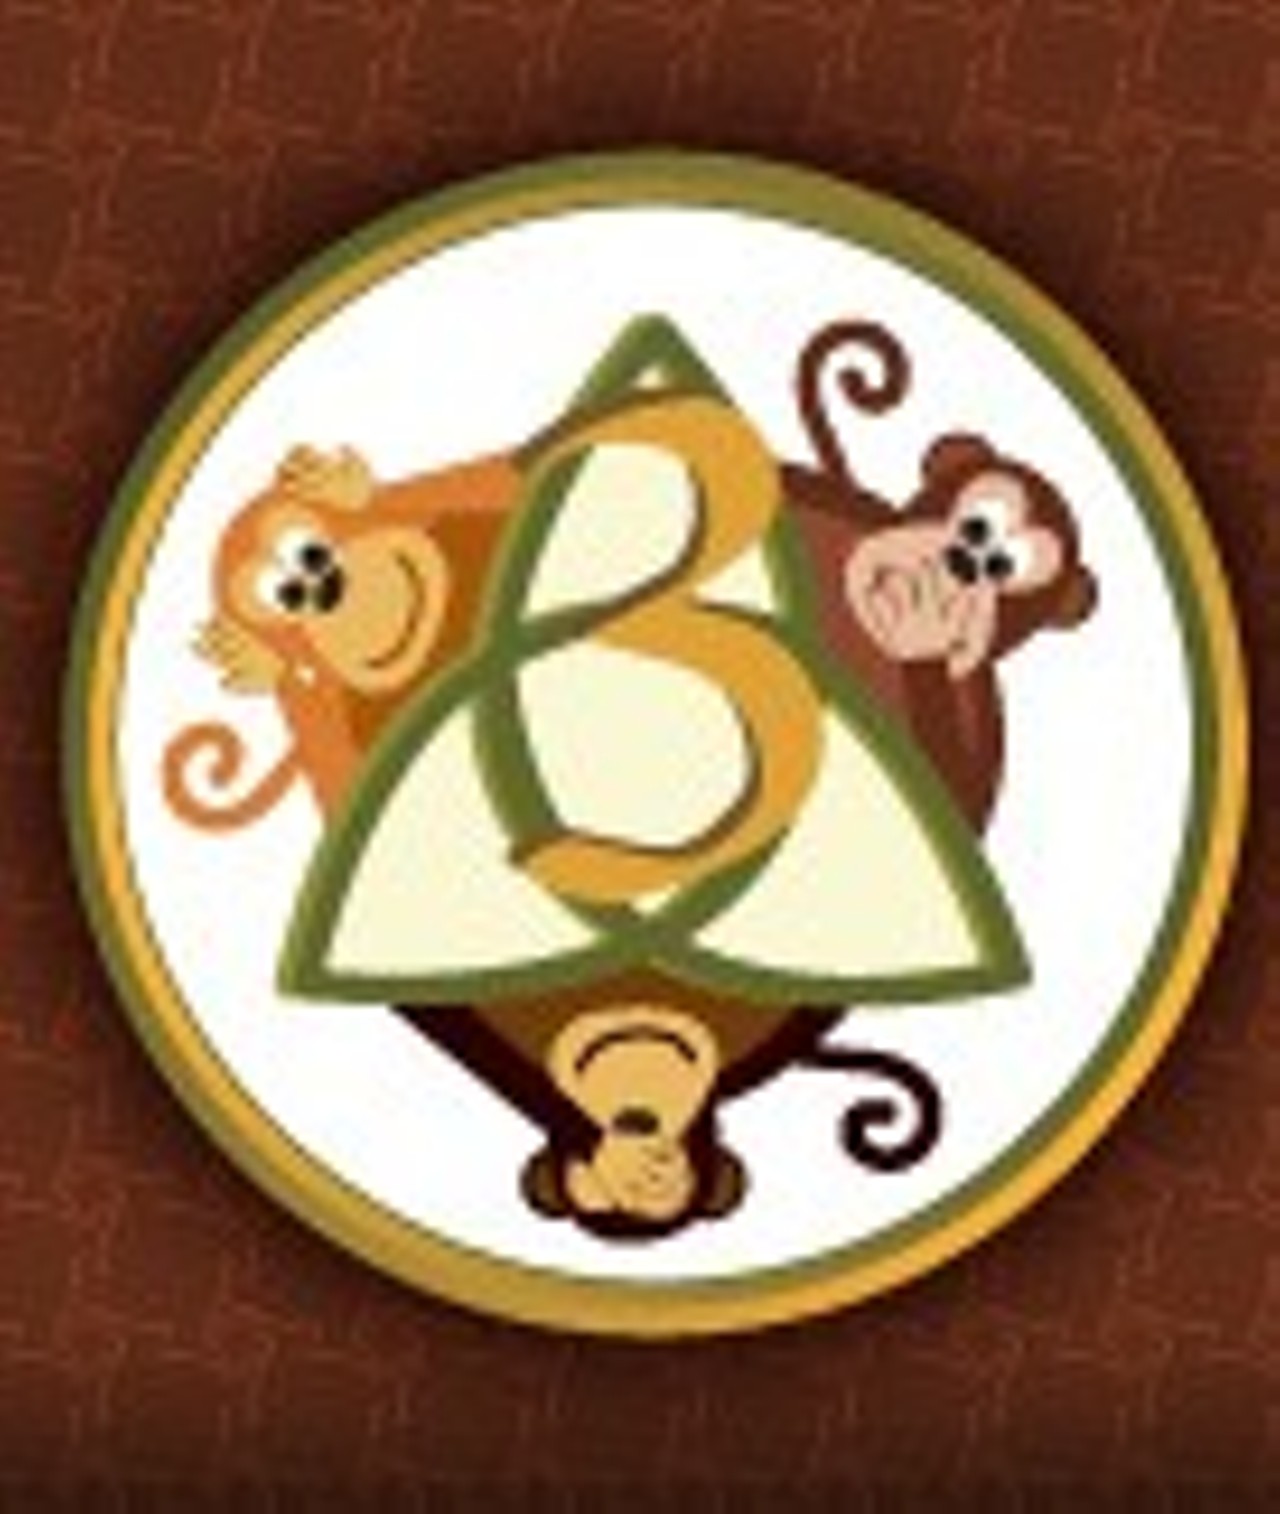 Three Monkeys 6th Anniversary and Chili Cookoff